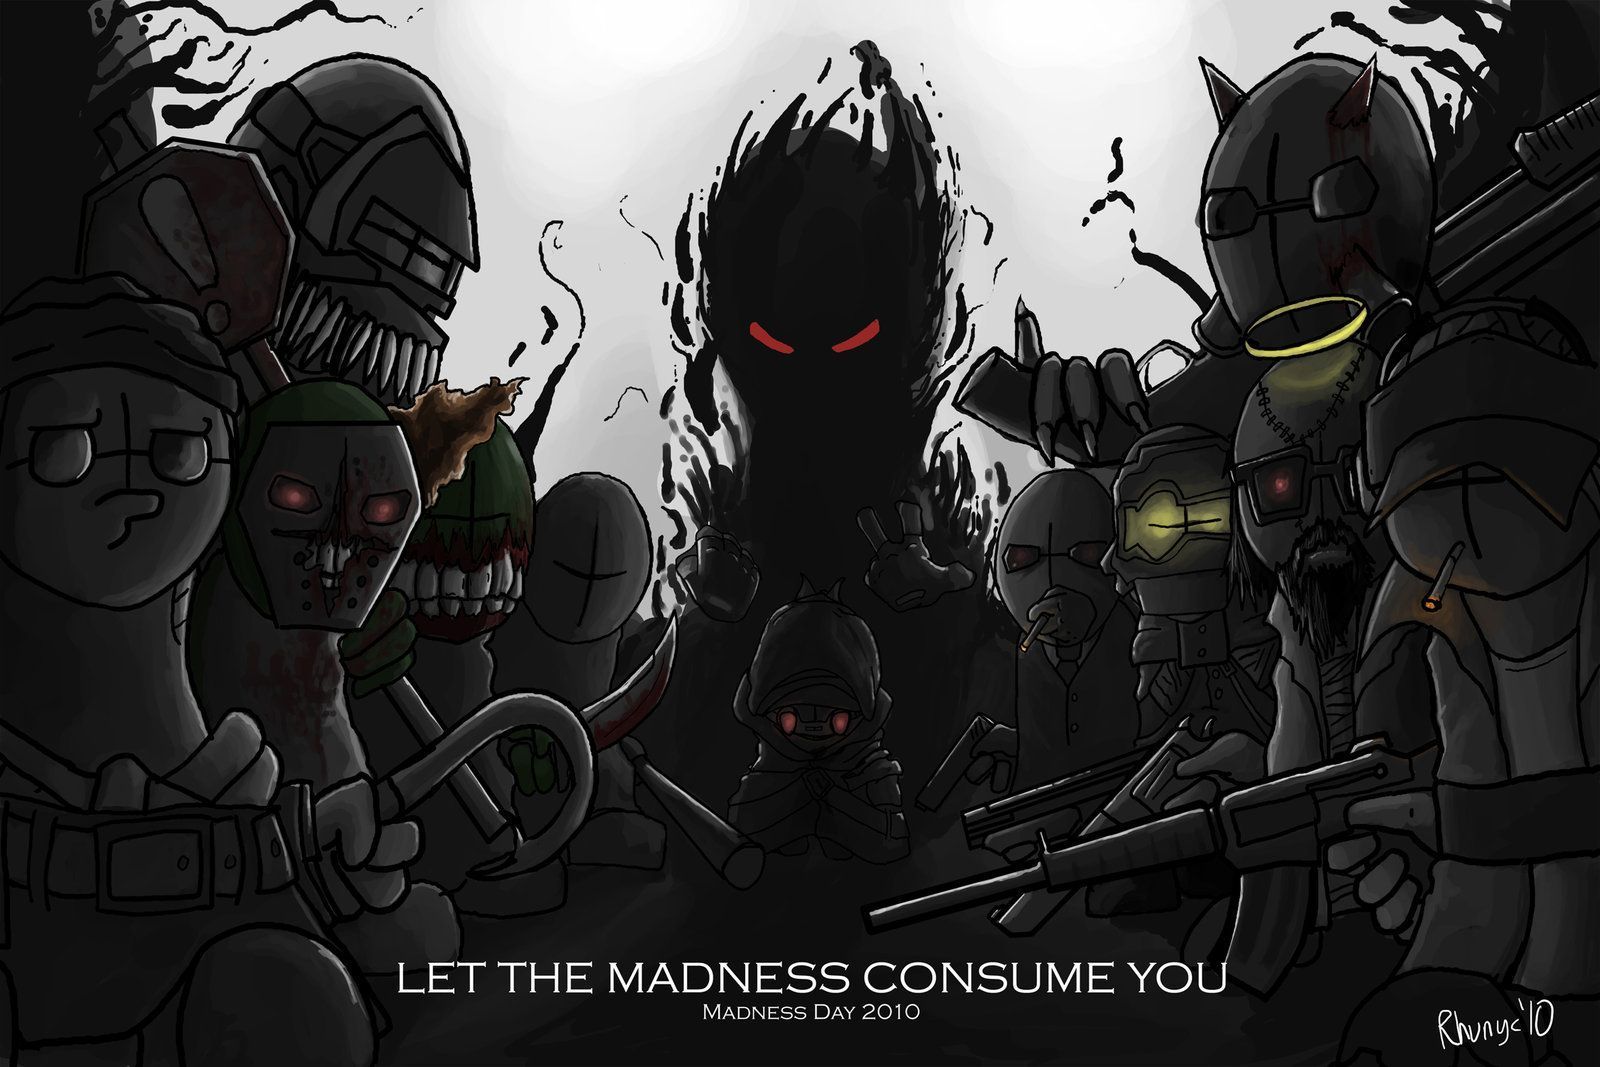 Madness Combat Background